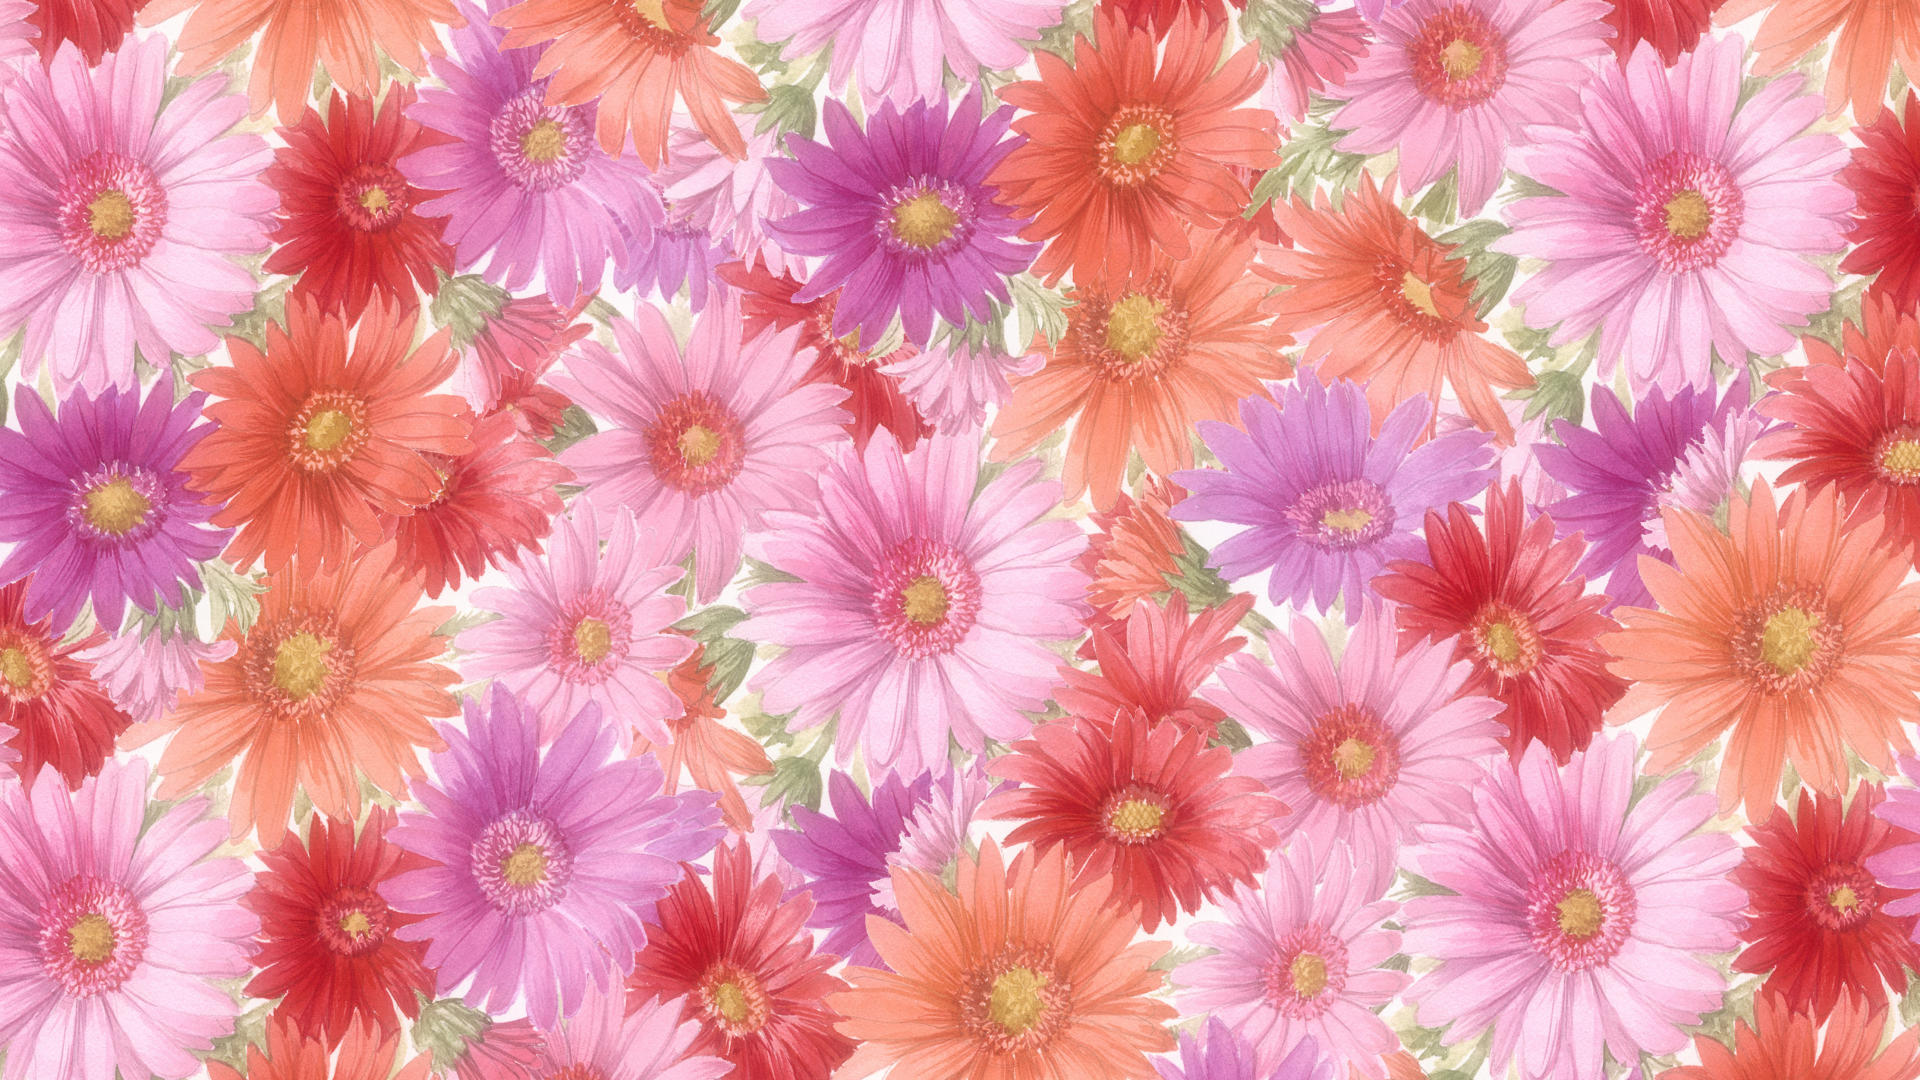 Hd Flower Wallpaper Pics Of Laptop Flowers Background ~ Gipsypixel.com